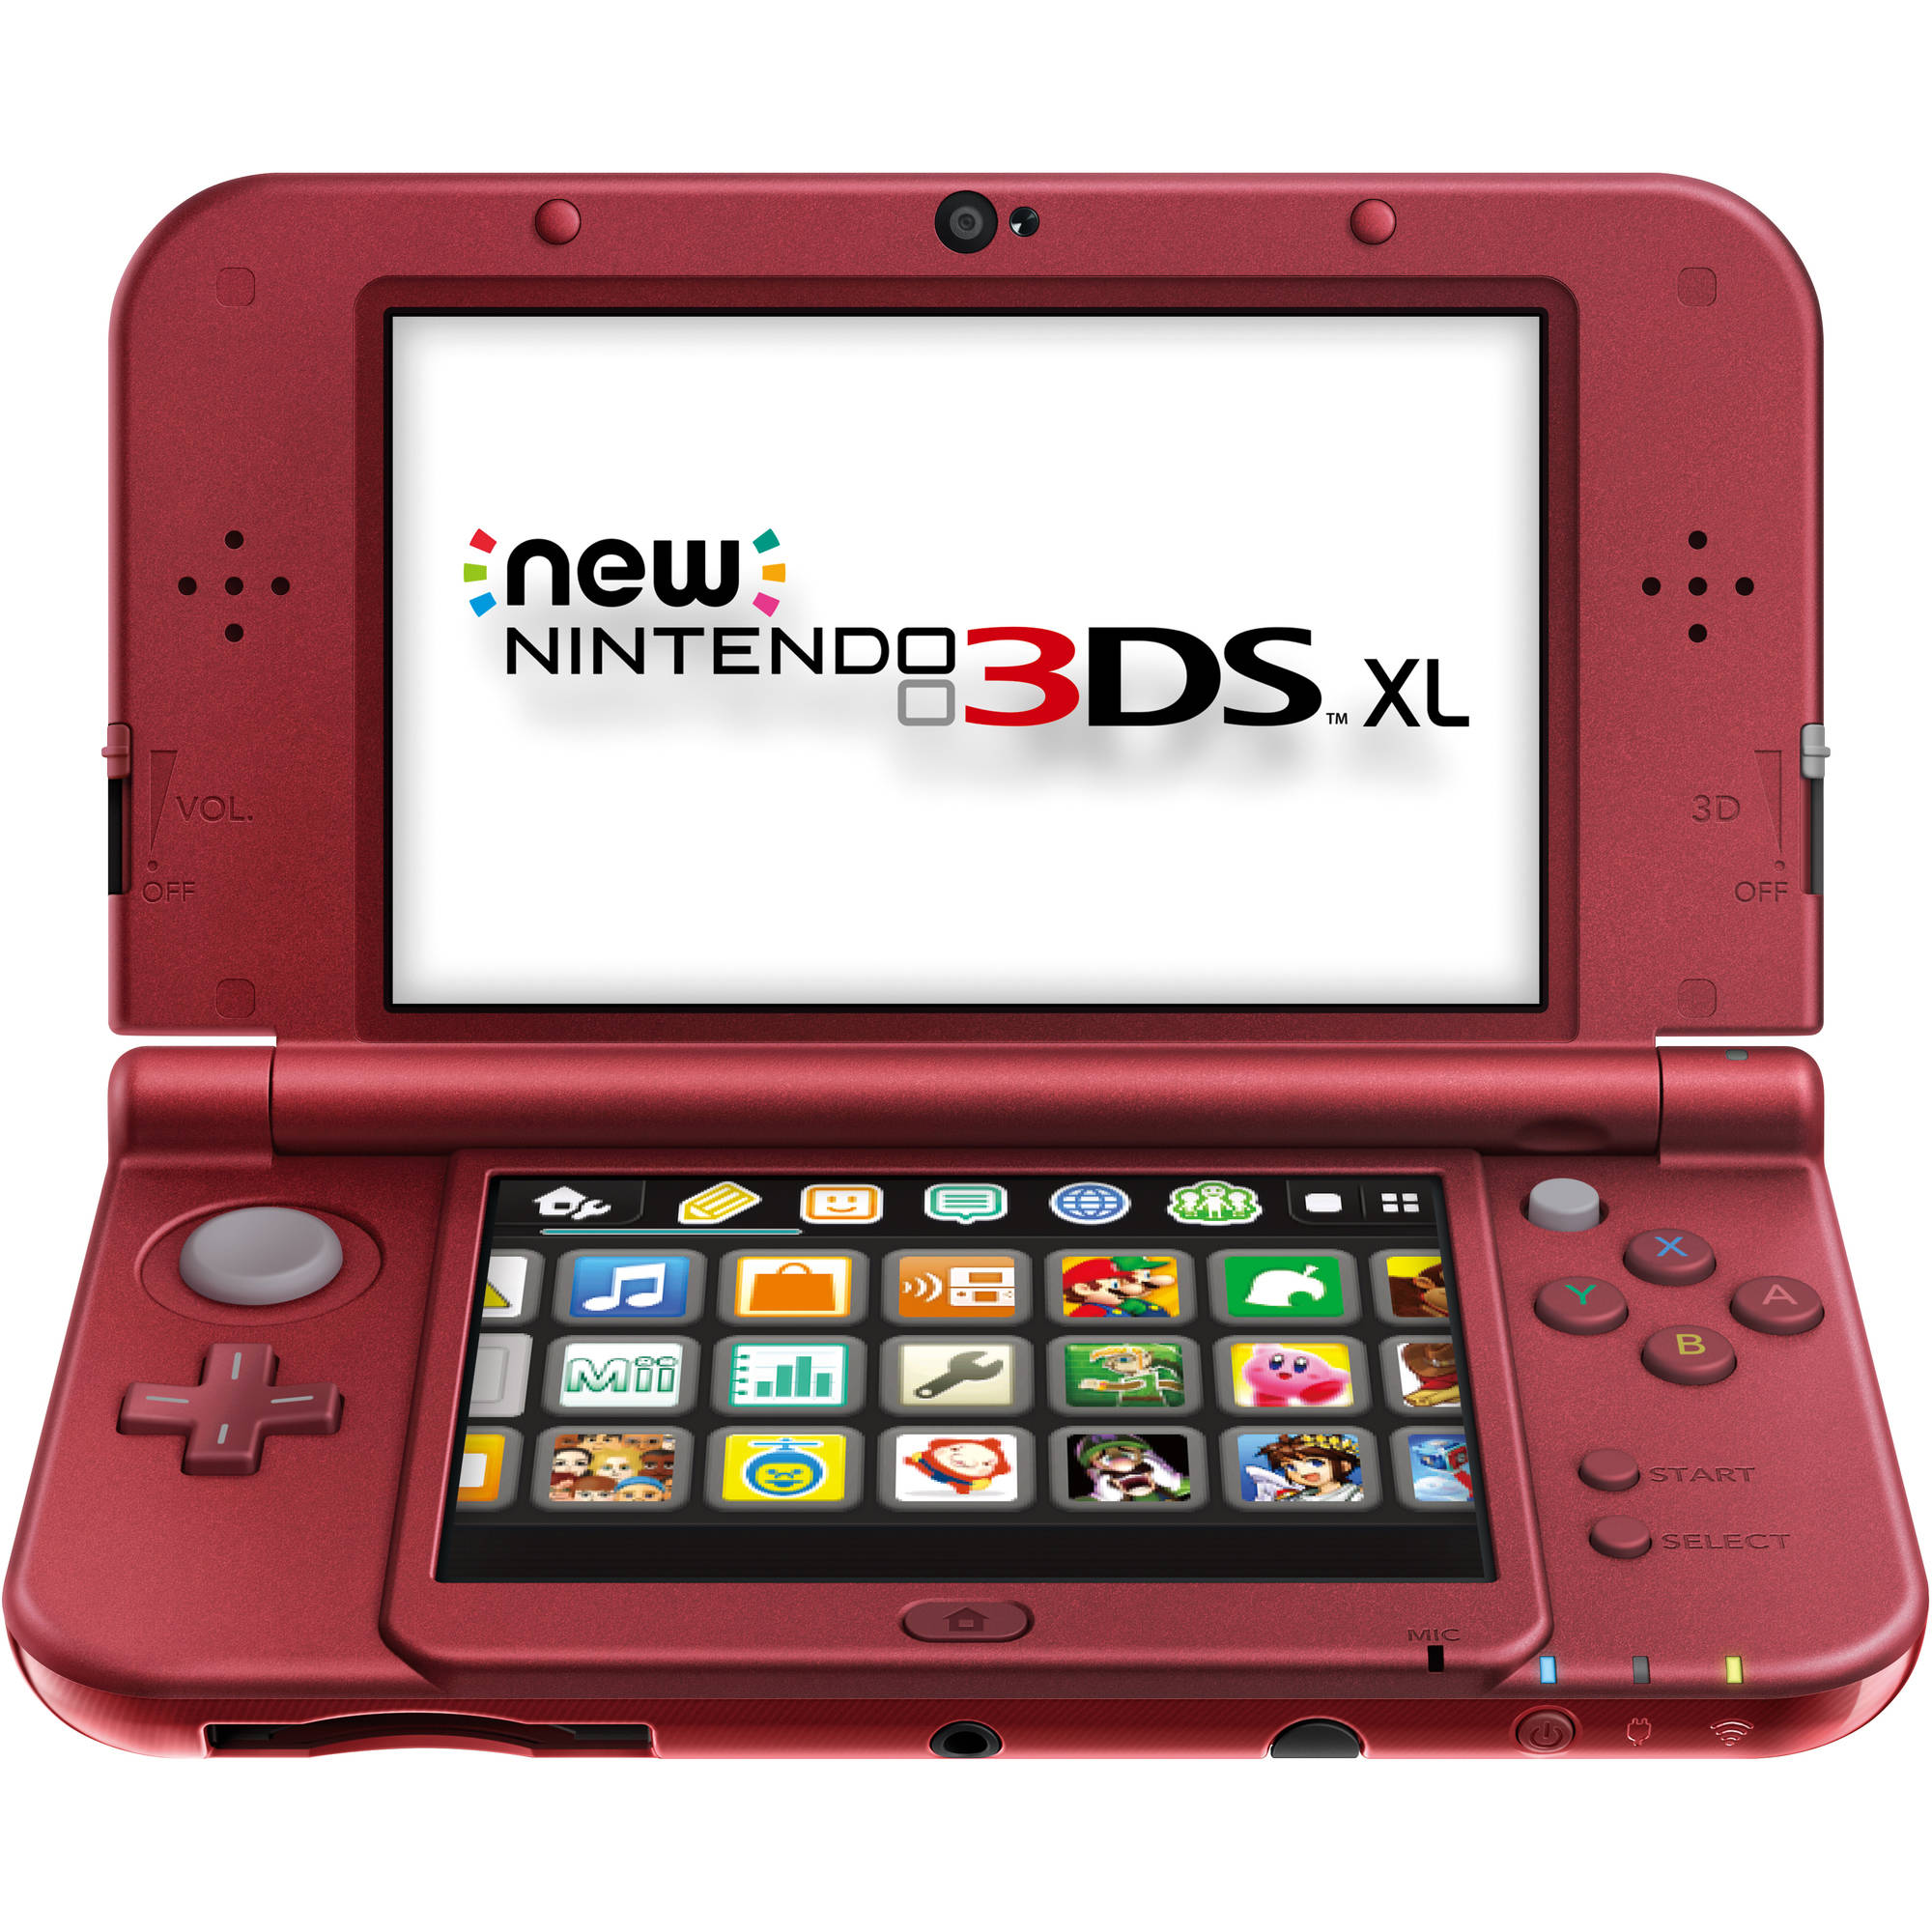 Nintendo 3DS XL Handheld, Red - image 1 of 14